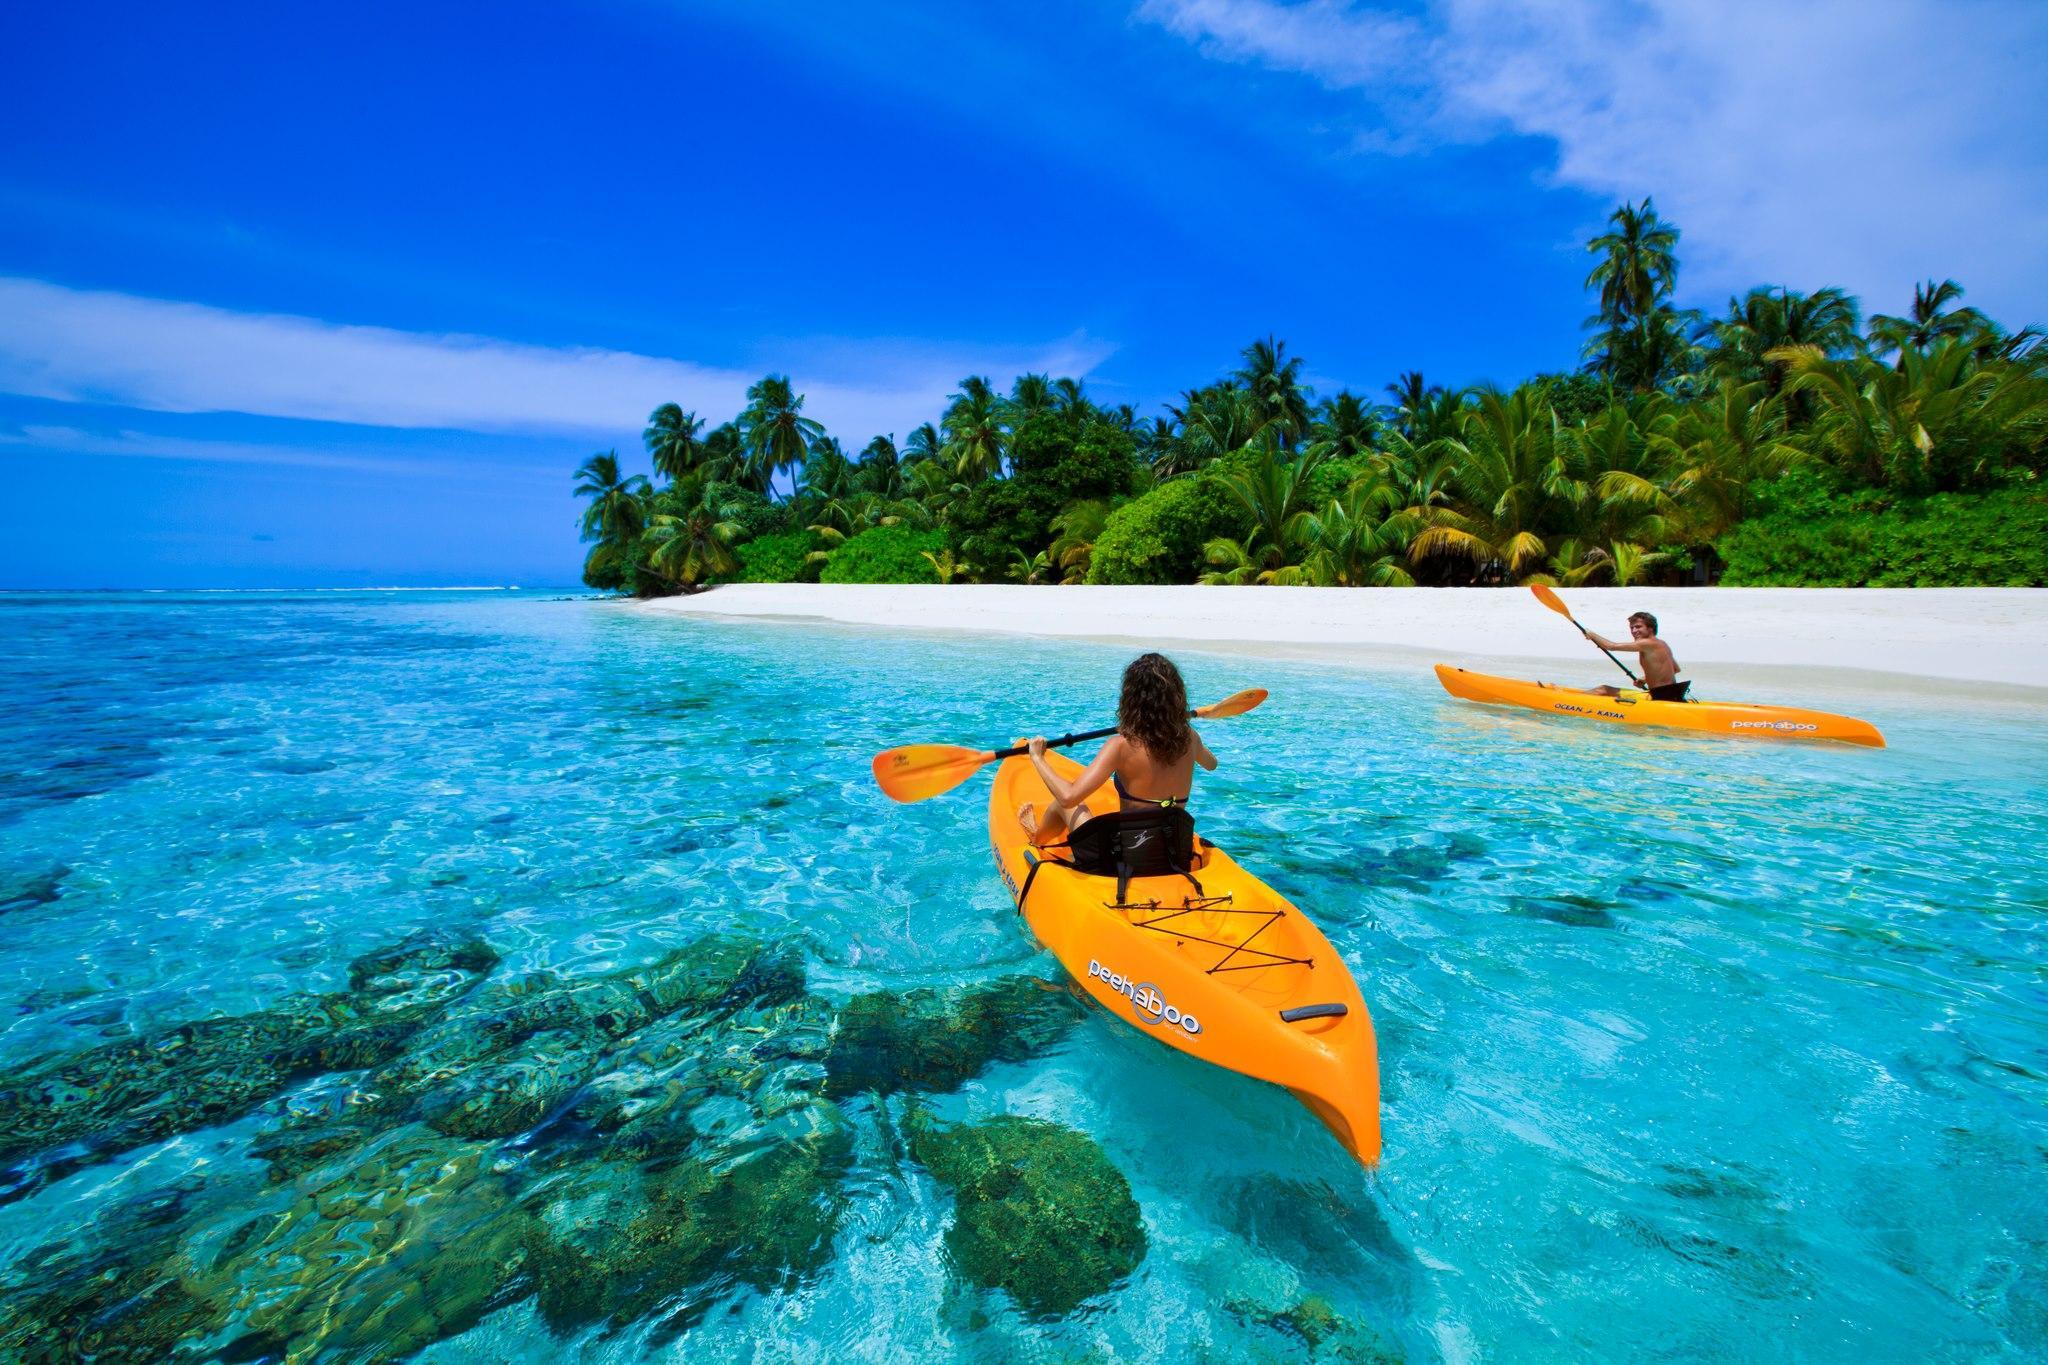 28 Hot Maldives Pictures